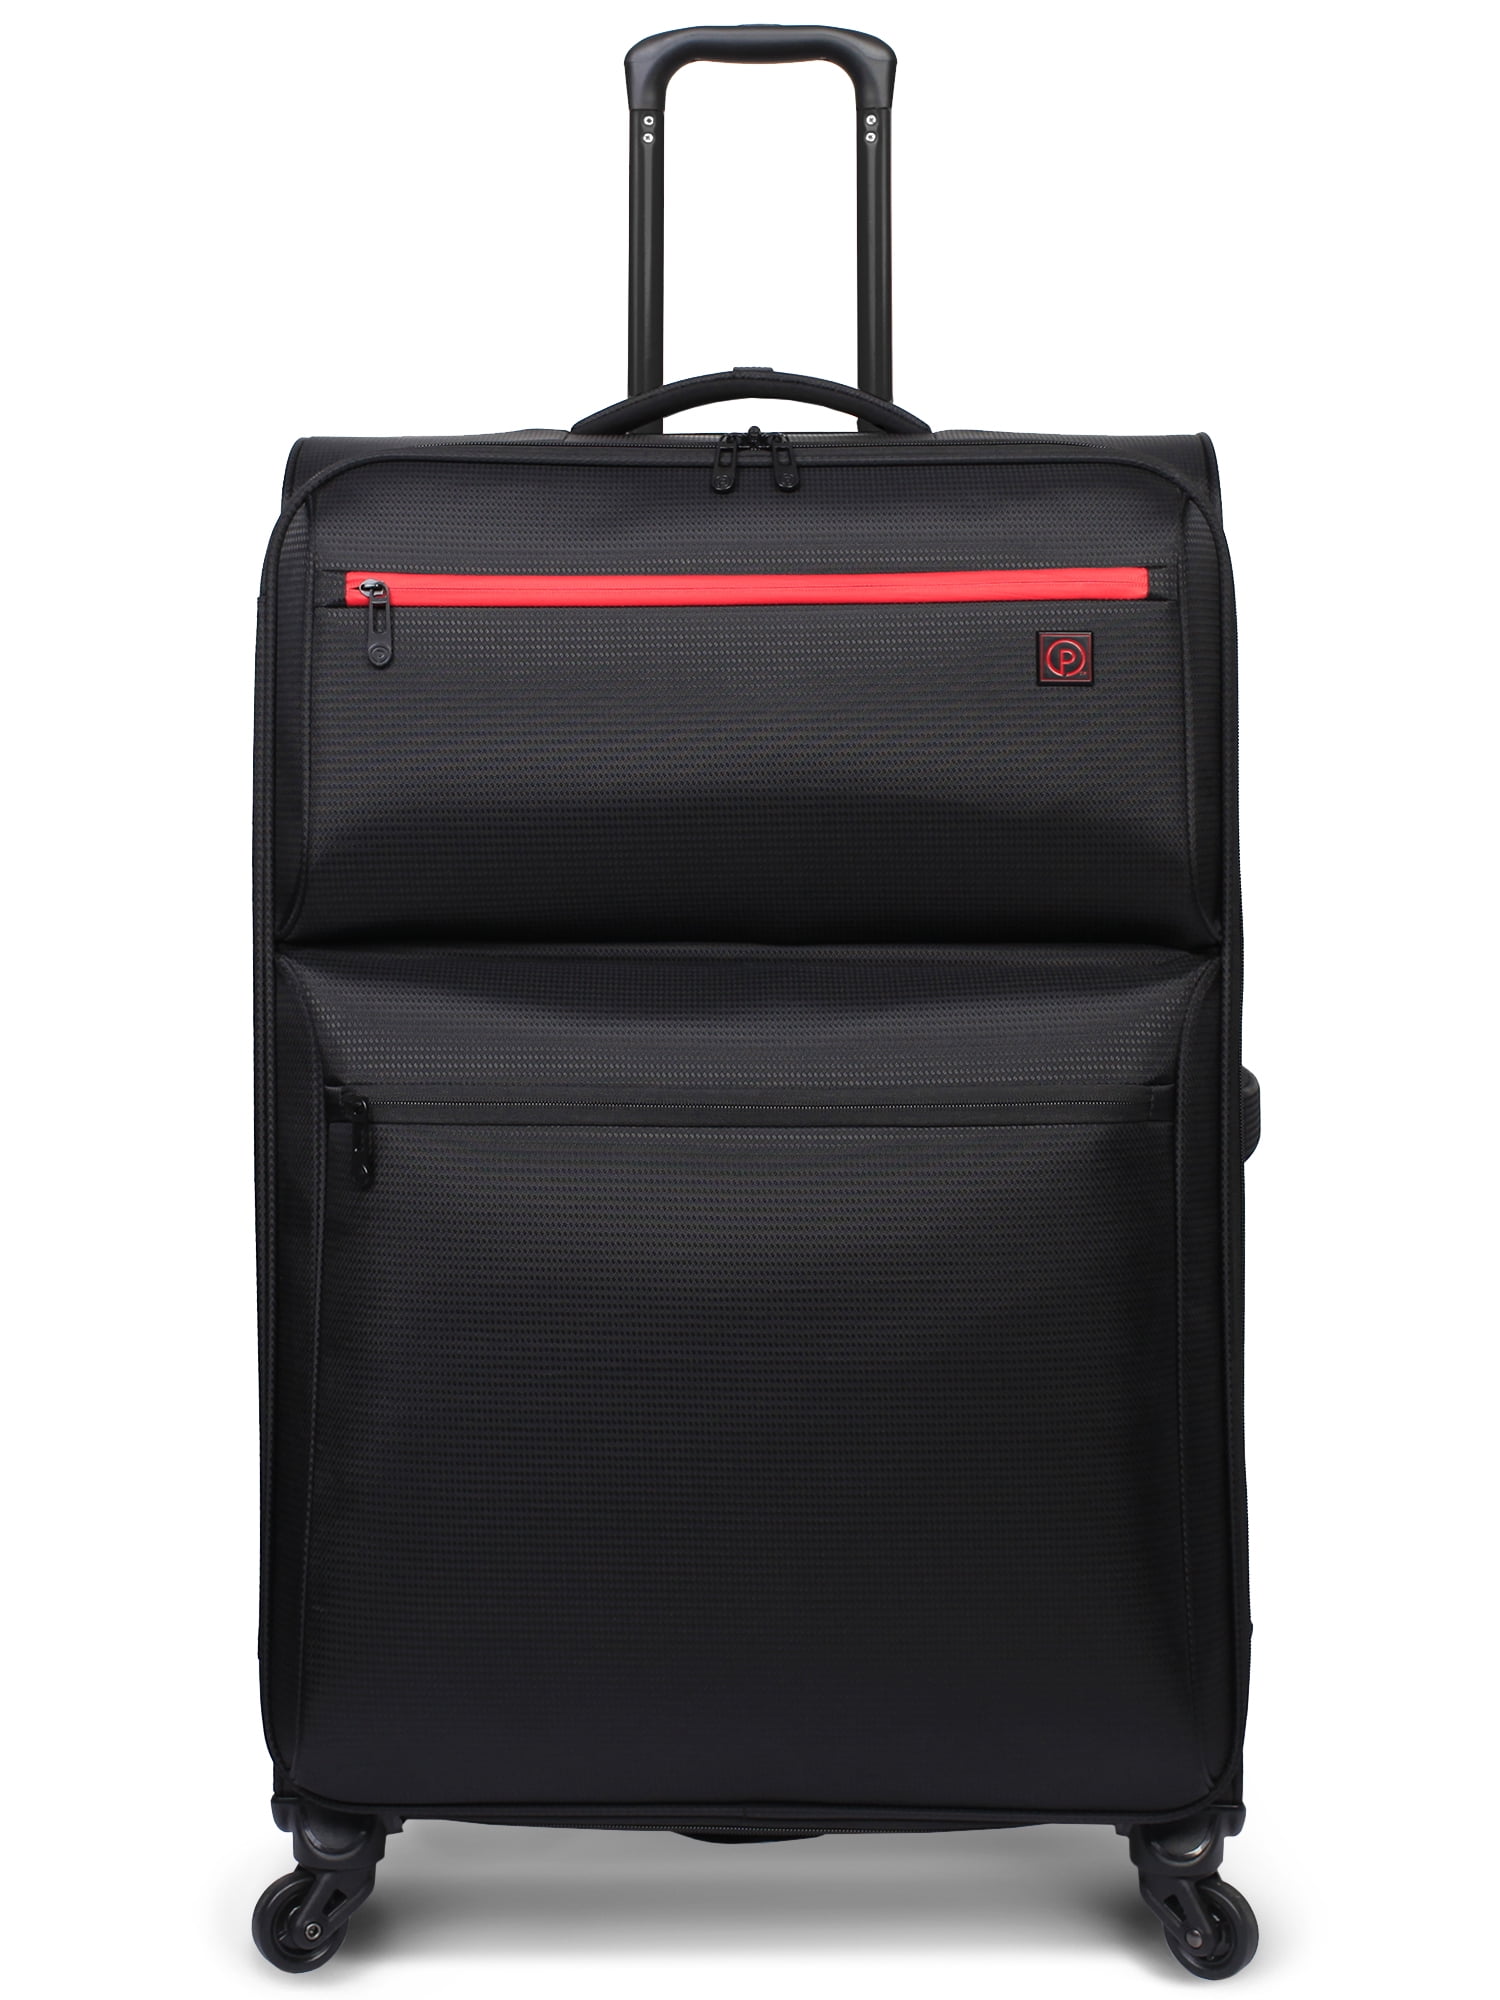 Protege Trulite 30" Lightweight Check Luggage Black, 30" x 12" x 19", 9lbs